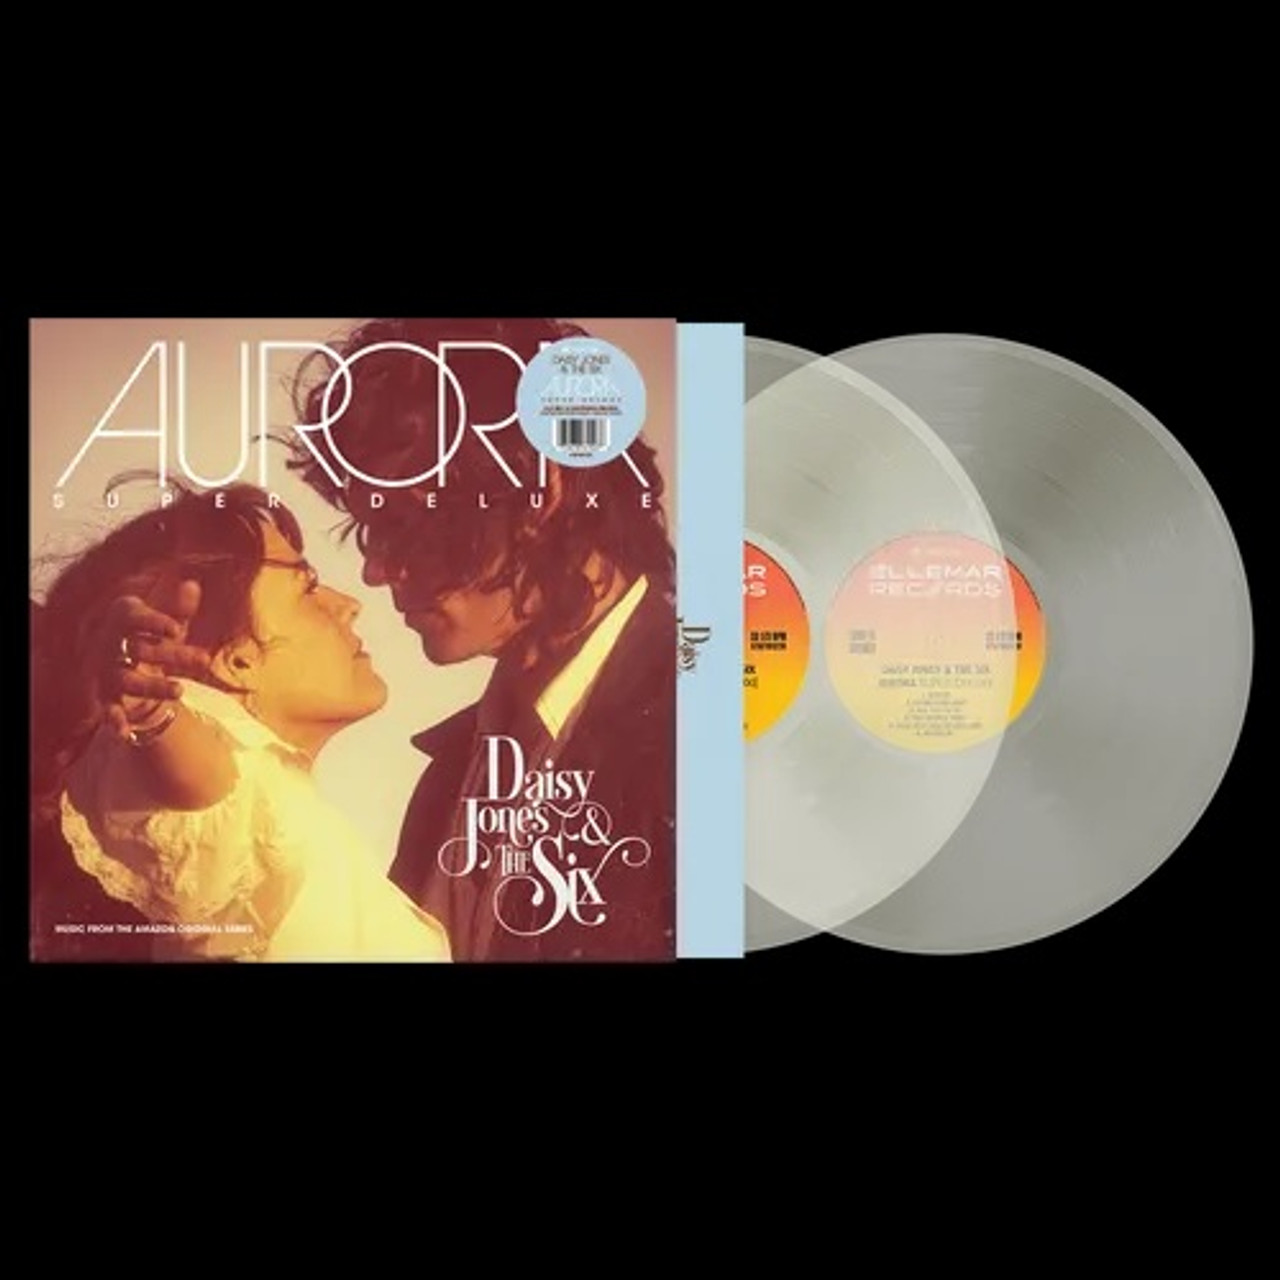 Aurora (Deluxe) - Daisy Jones & The Six (#075678615276)